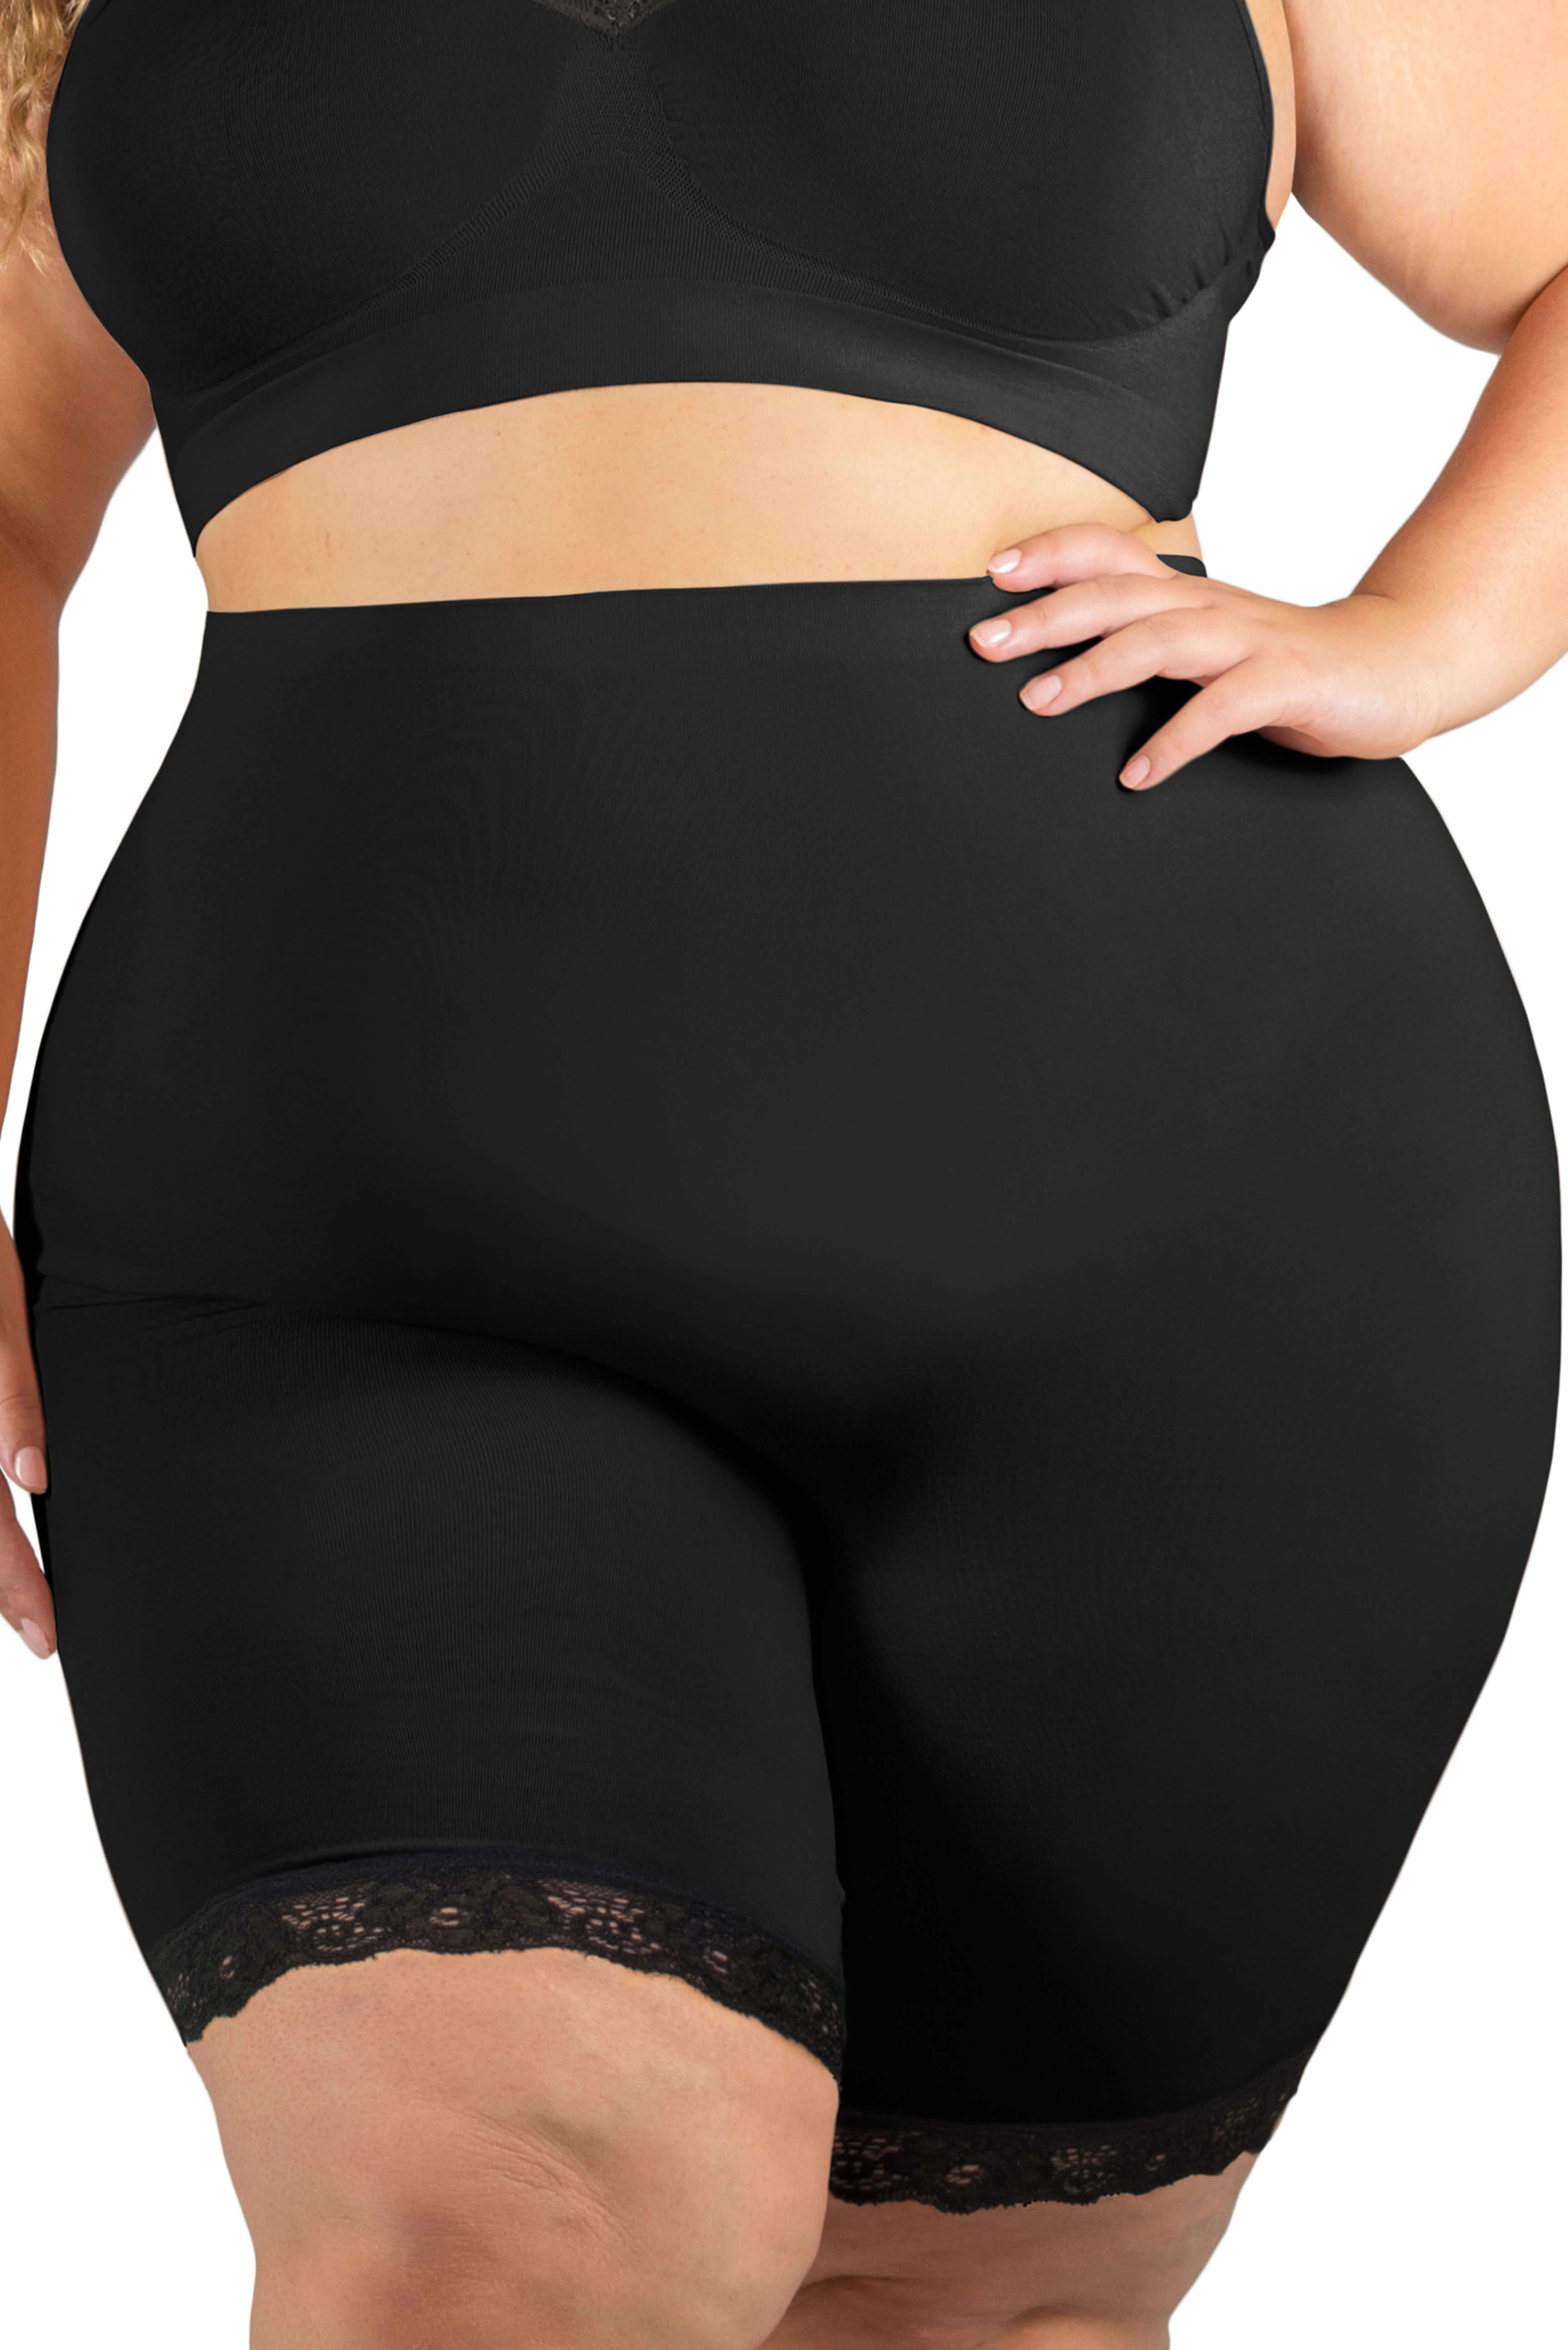 Anti Chafing Underwear Shorts (Nude/Black). Prevent thigh discomfort! – B  Free Australia